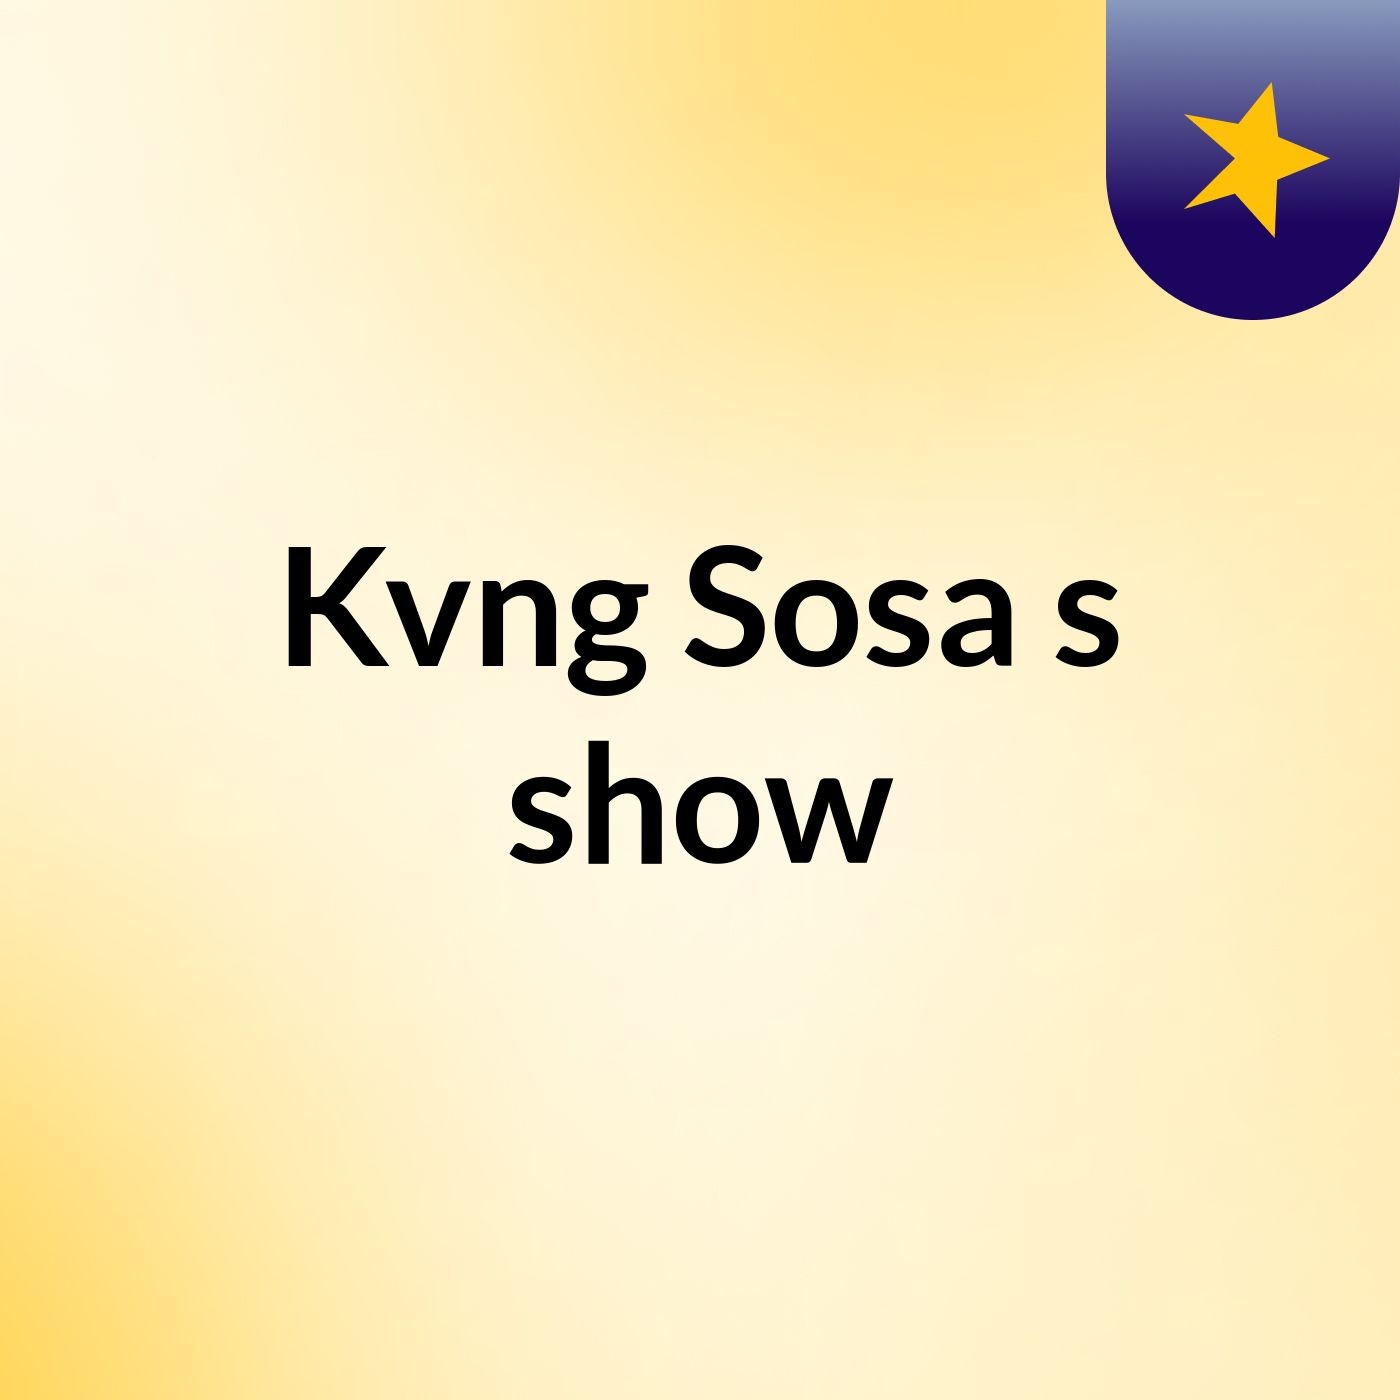 Kvng Sosa's show